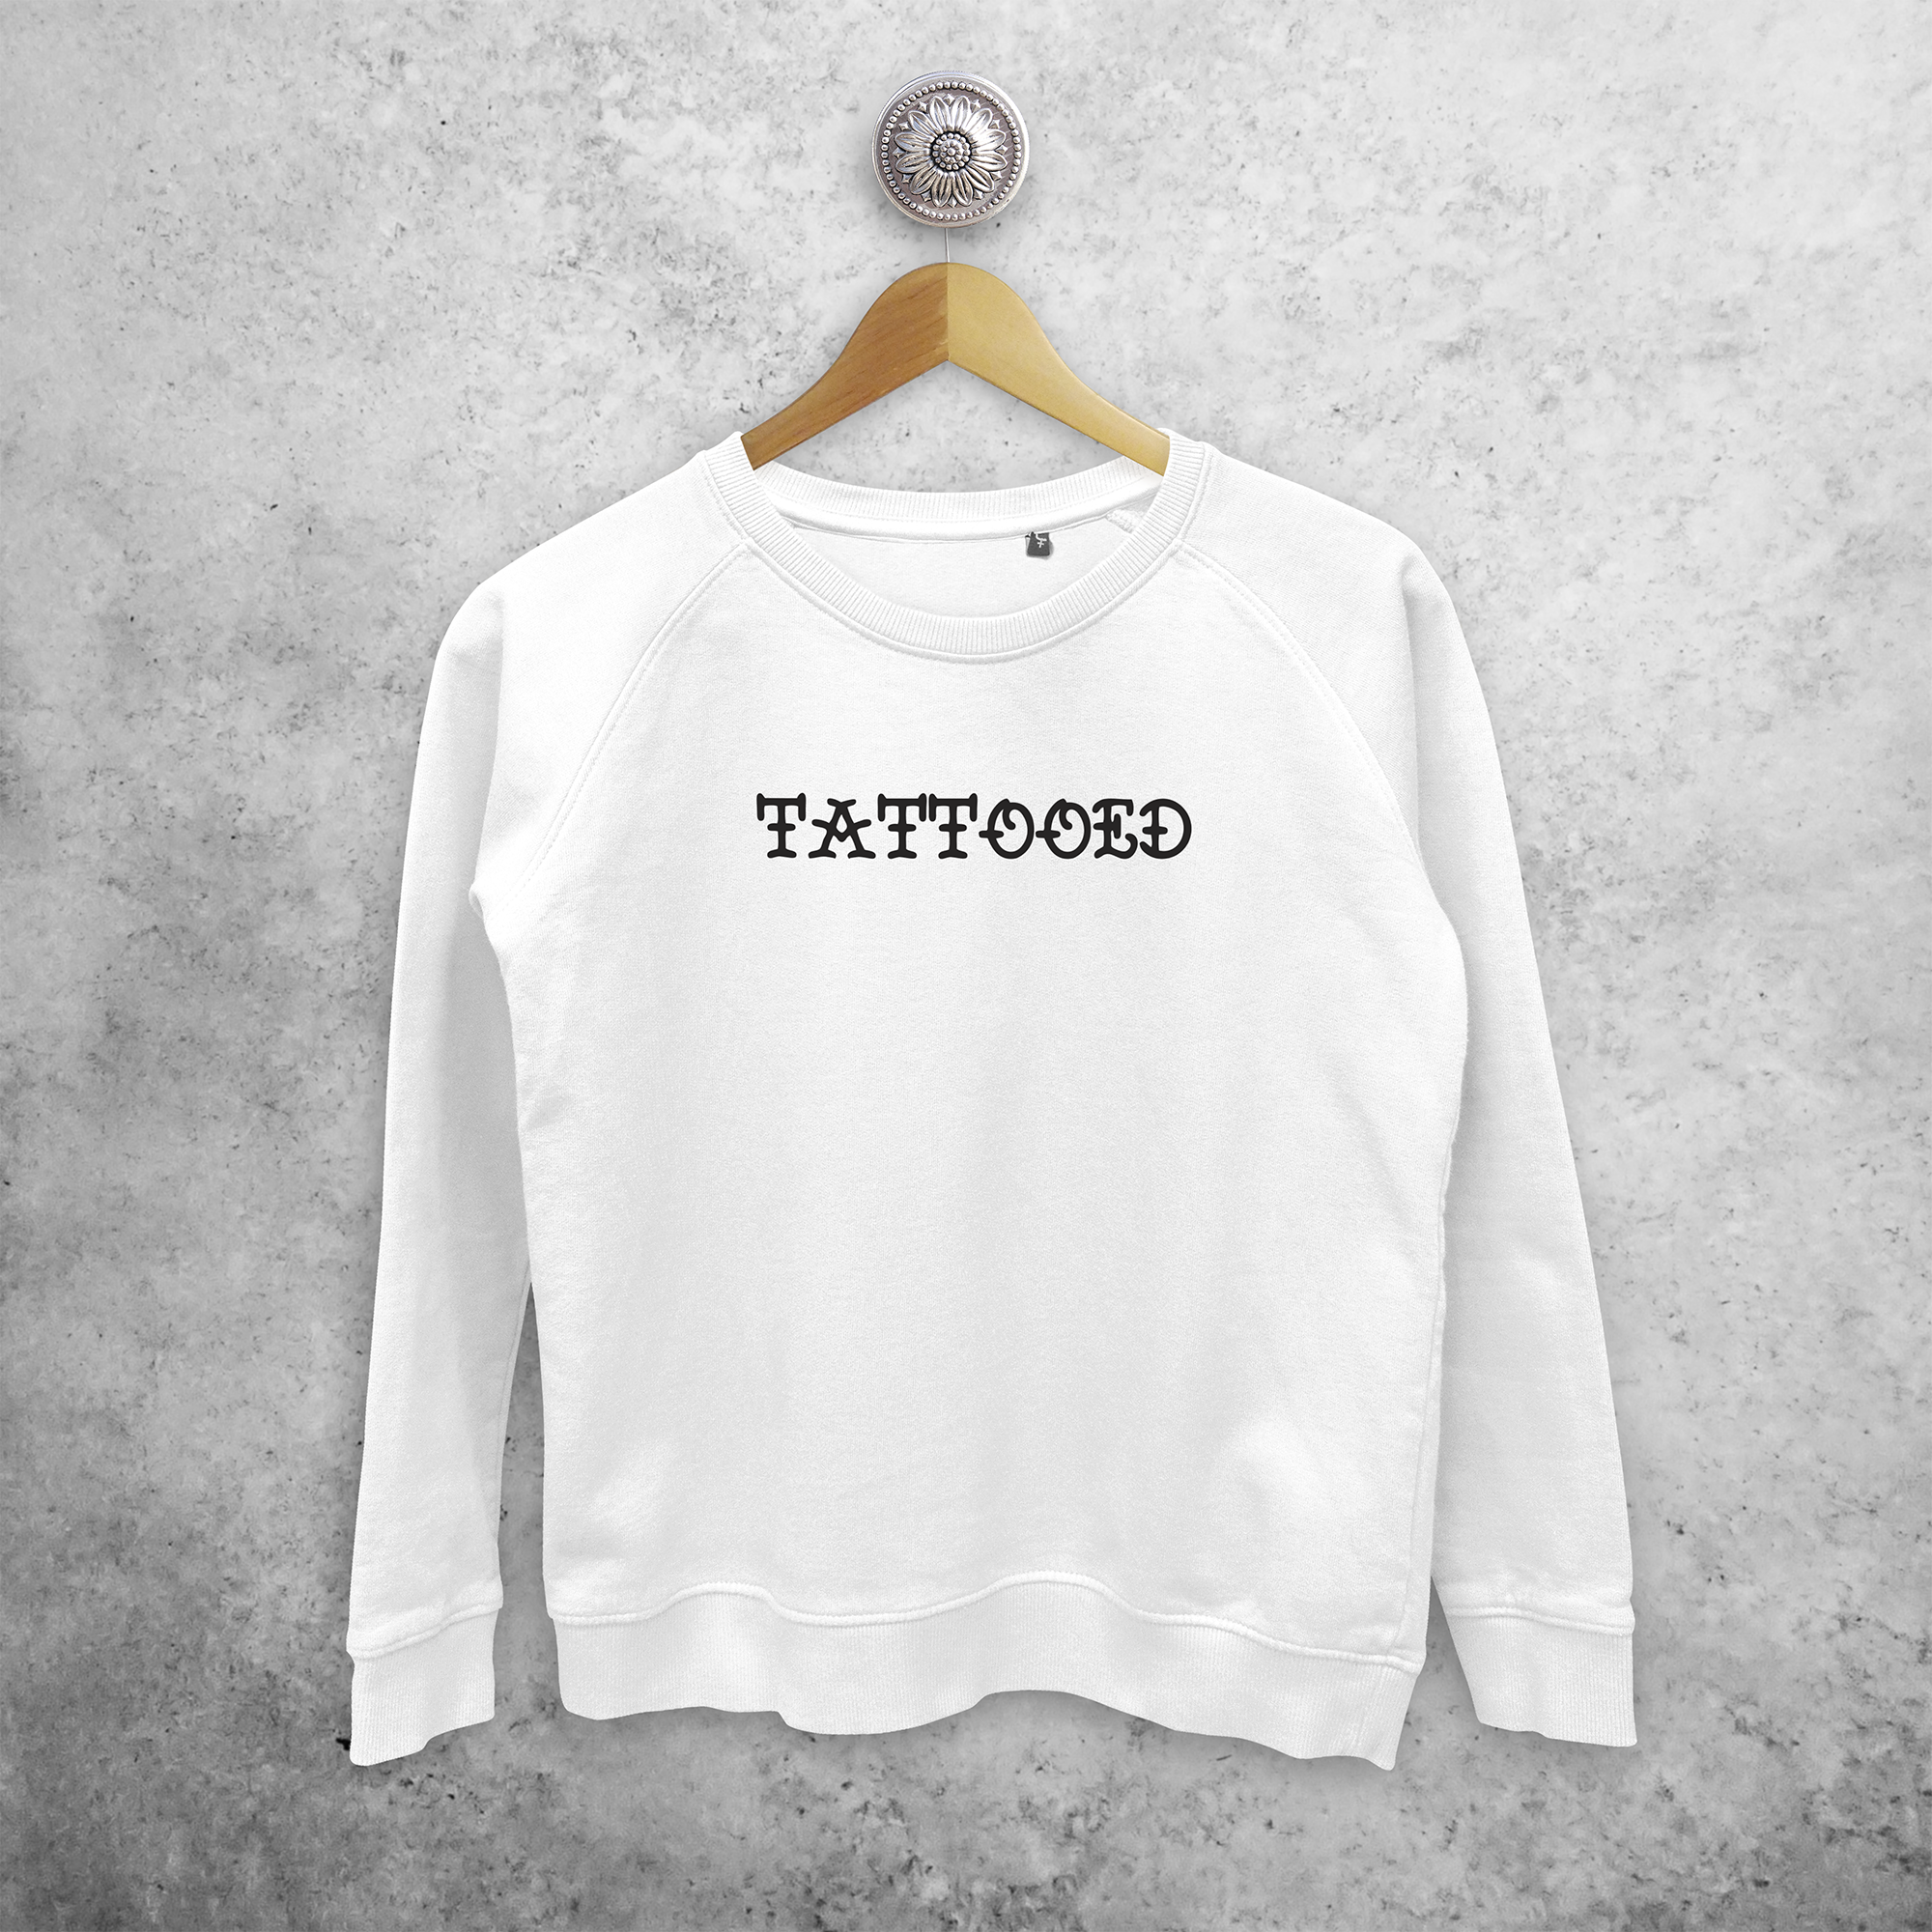 'Tattooed' sweater